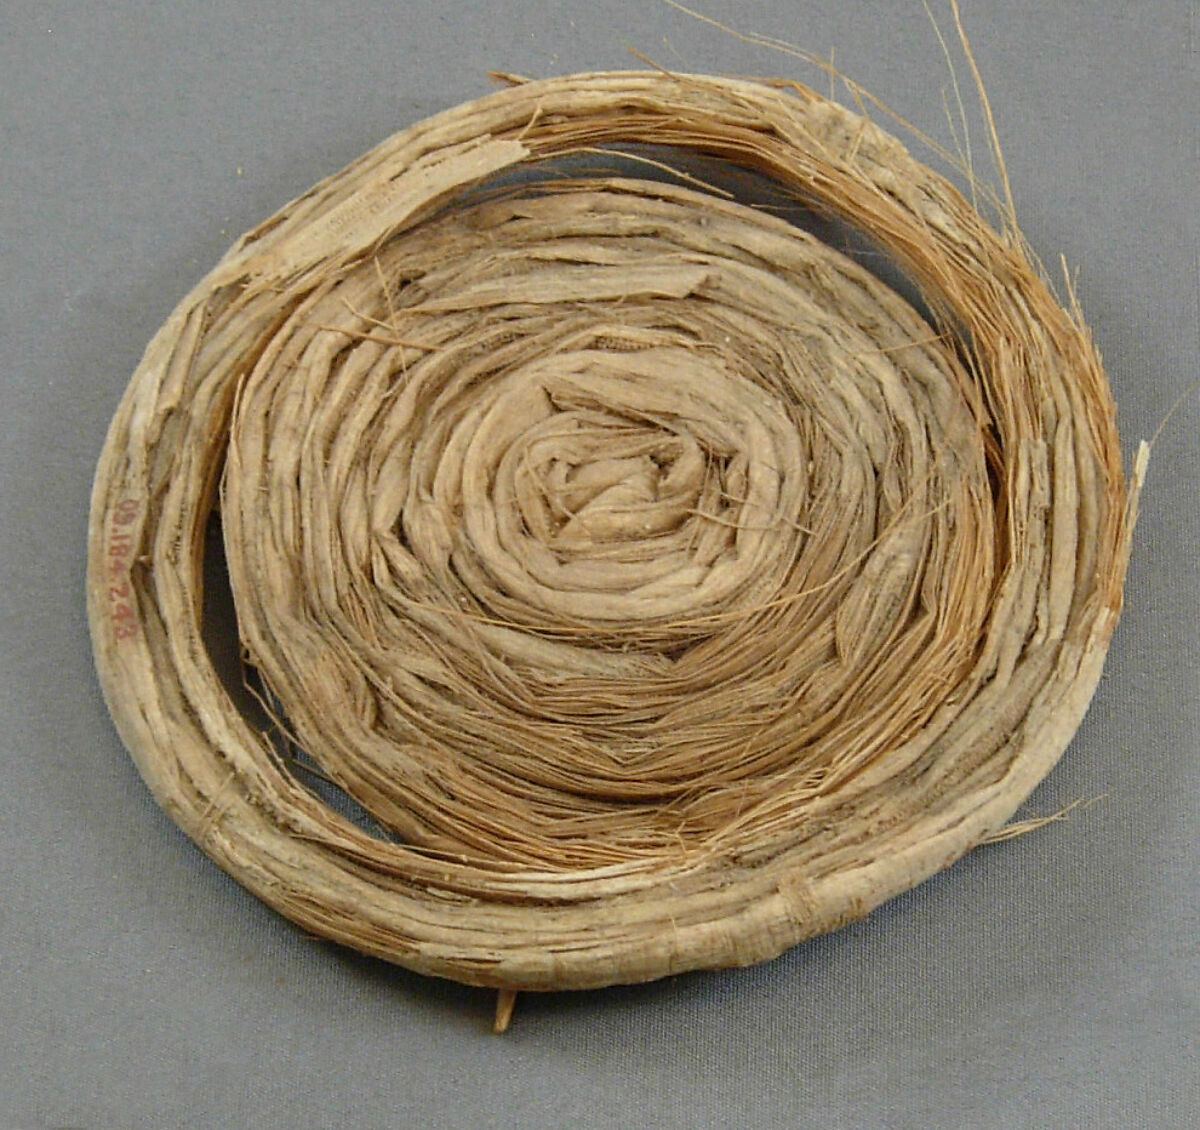 Papyrus Lids from the Embalming Cache of Tutankhamun, Papyrus fiber 